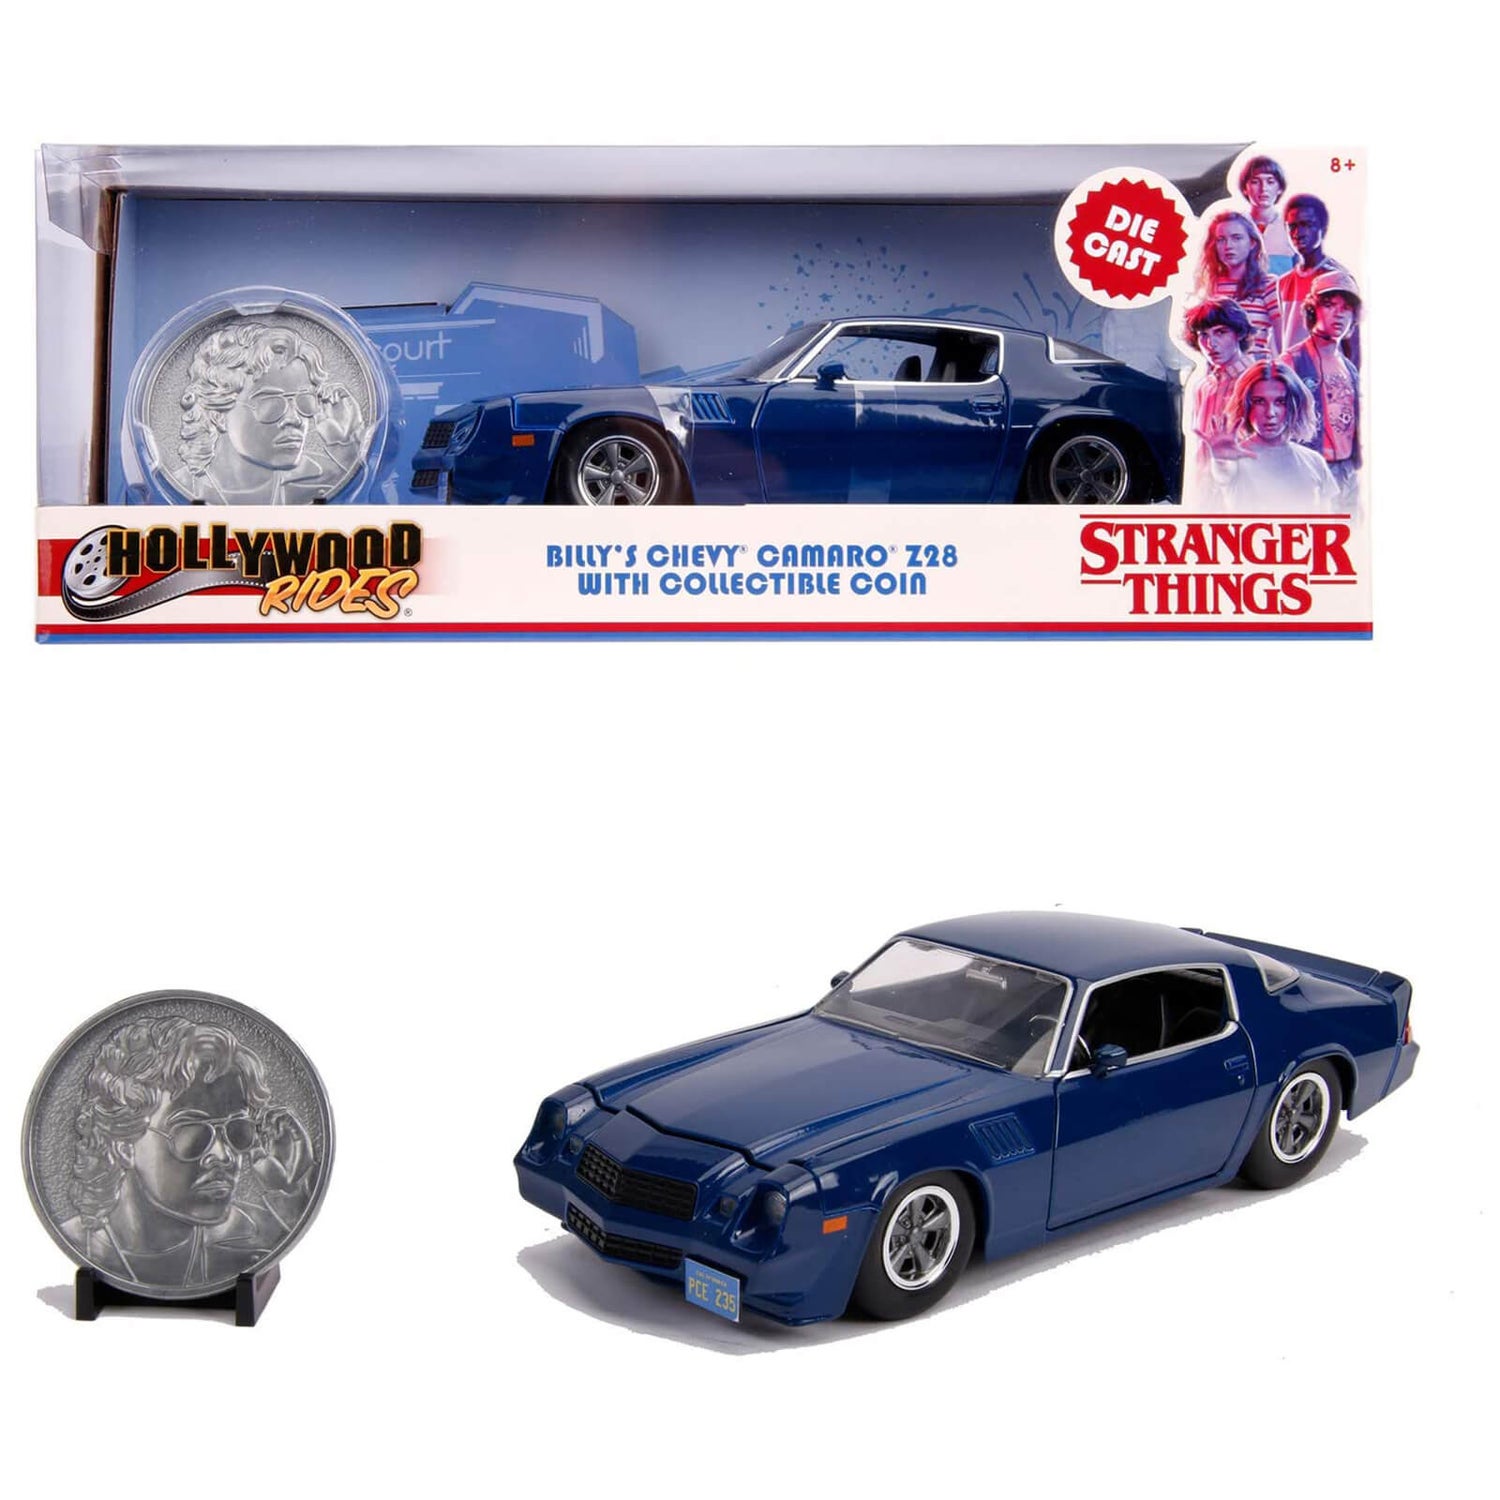 Jada Toys Stranger Things 1979 Chevy Camaro Z28 1:24